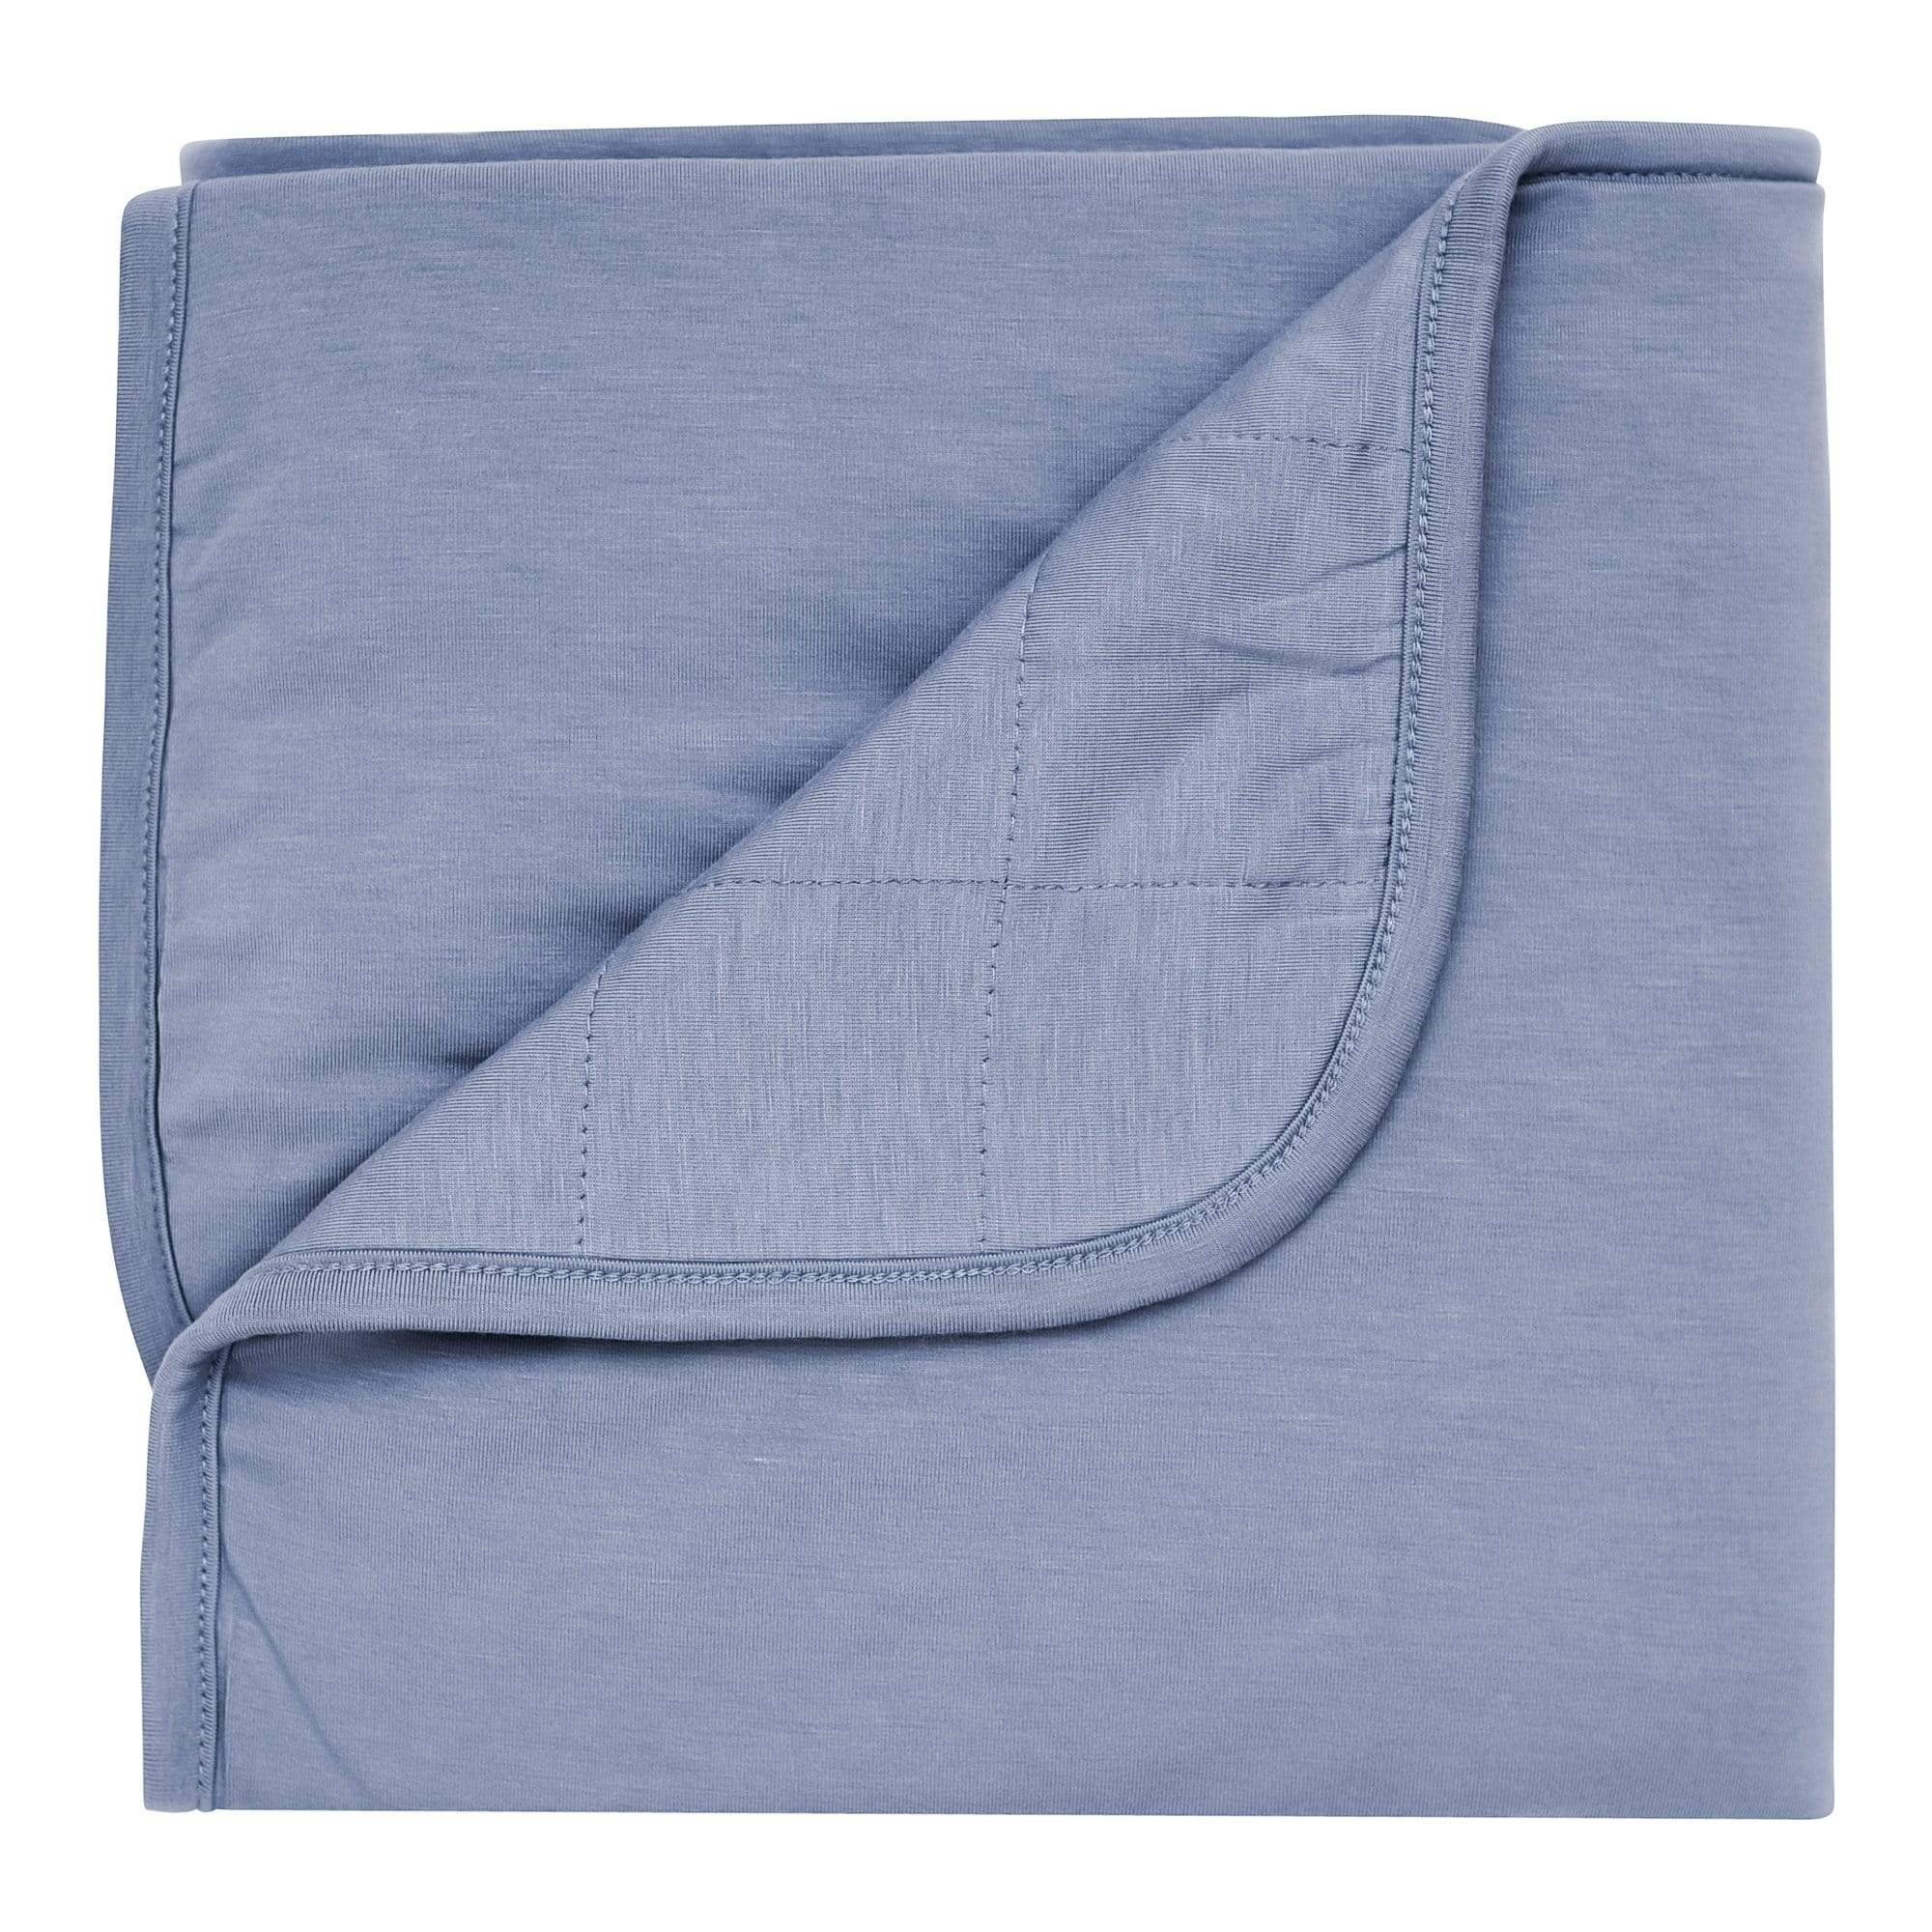 Kyte BABY Baby Blanket Slate / Infant / 1.0 Tog Baby Blanket in Slate